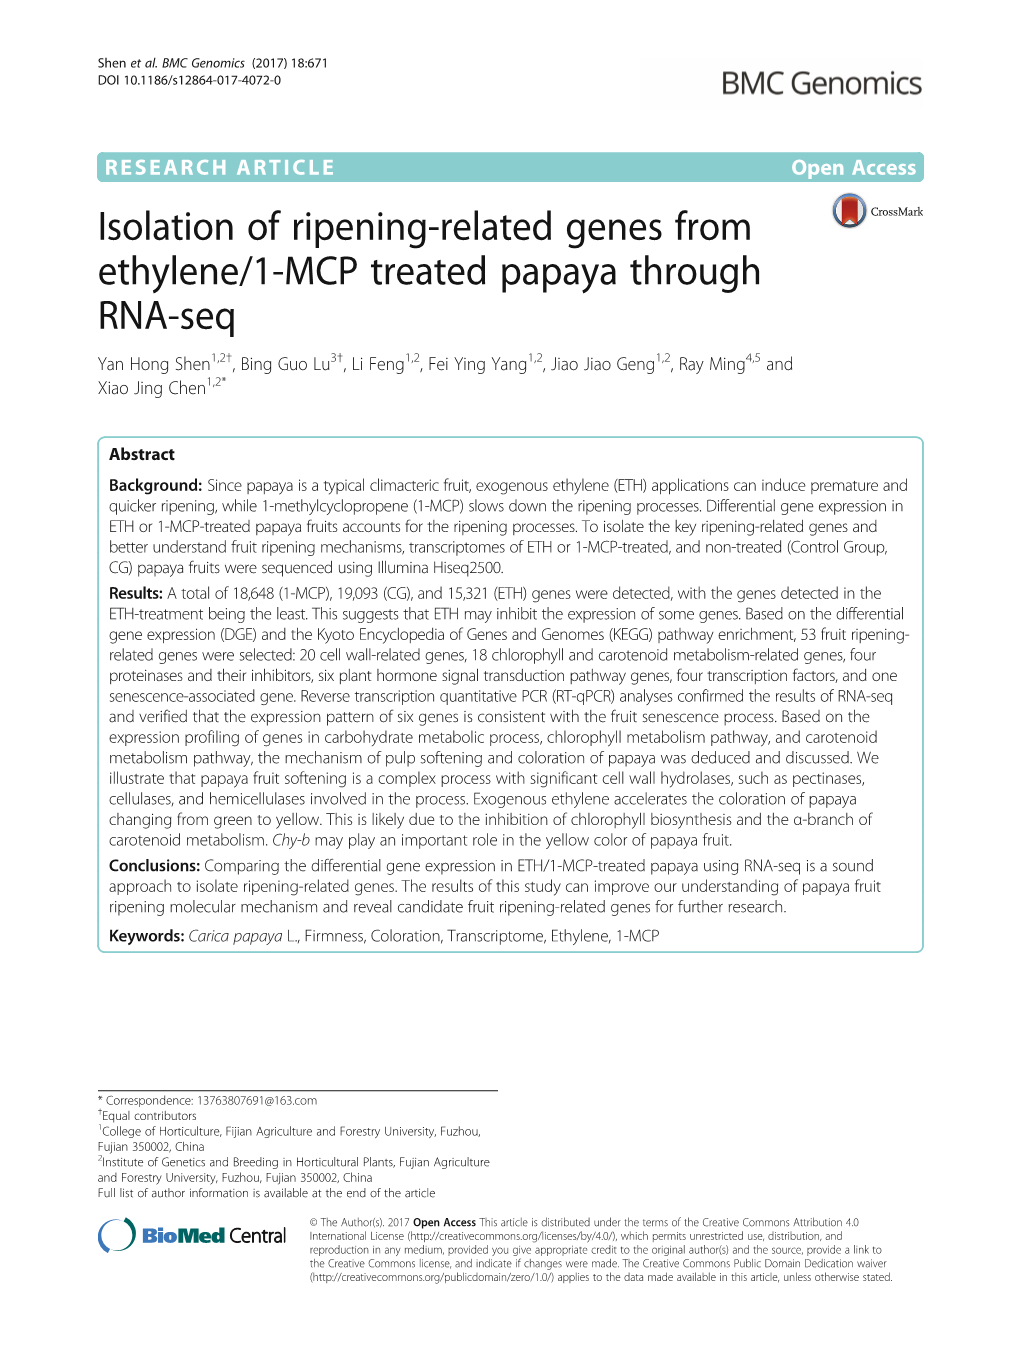 Isolation of Ripening-Related Genes from Ethylene/1